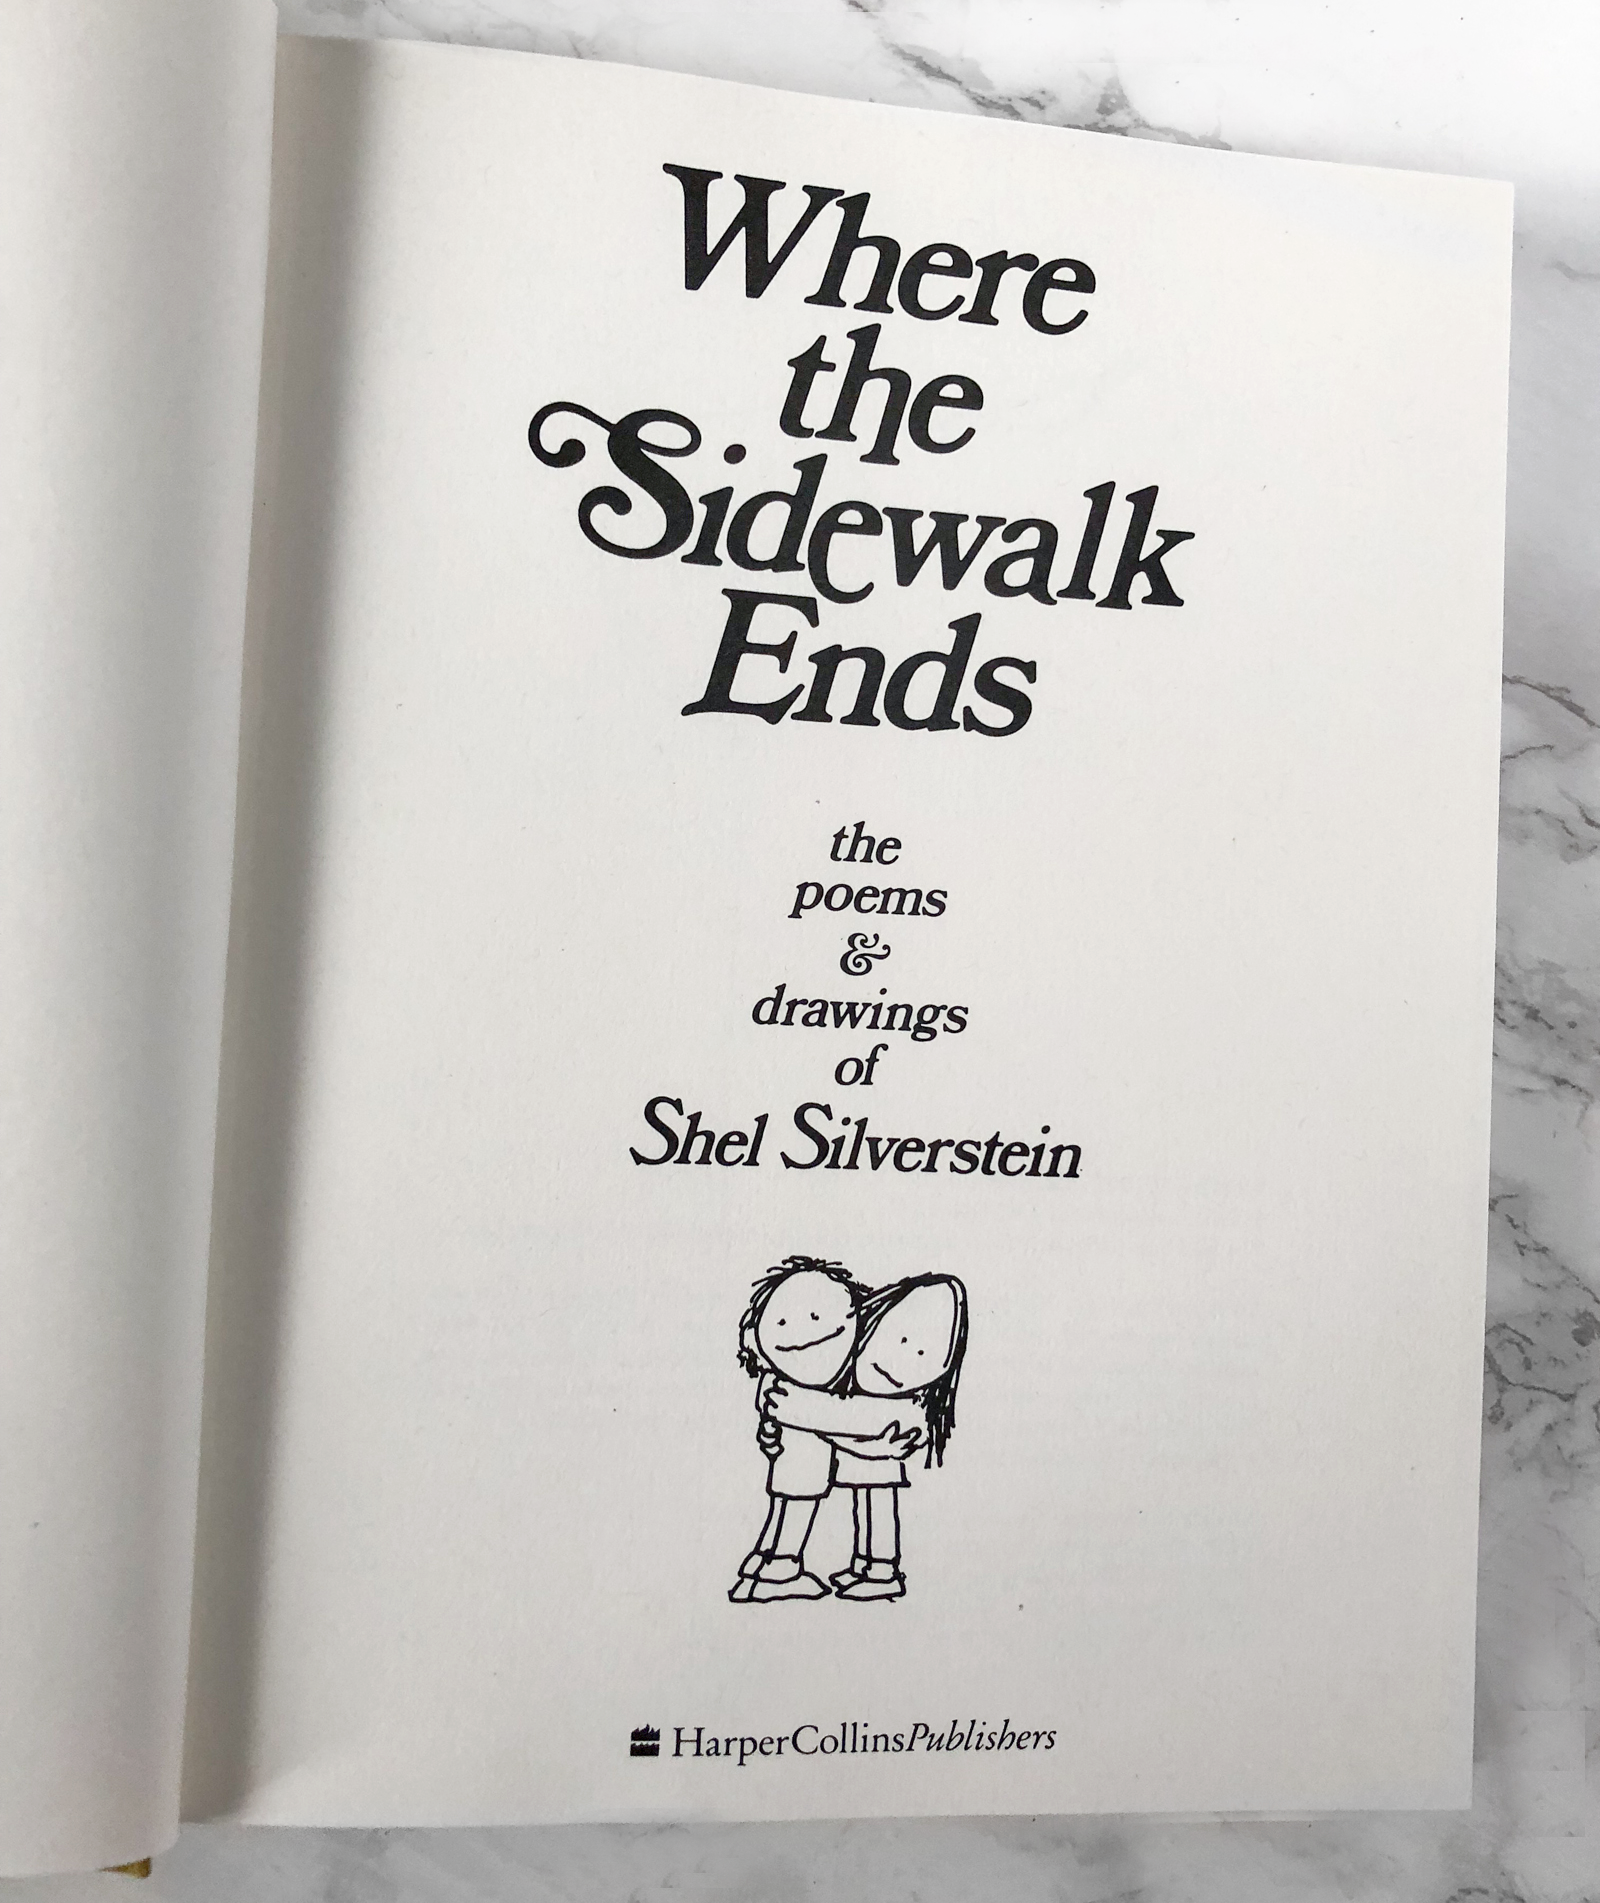 shel silverstein where the sidewalk ends poem list